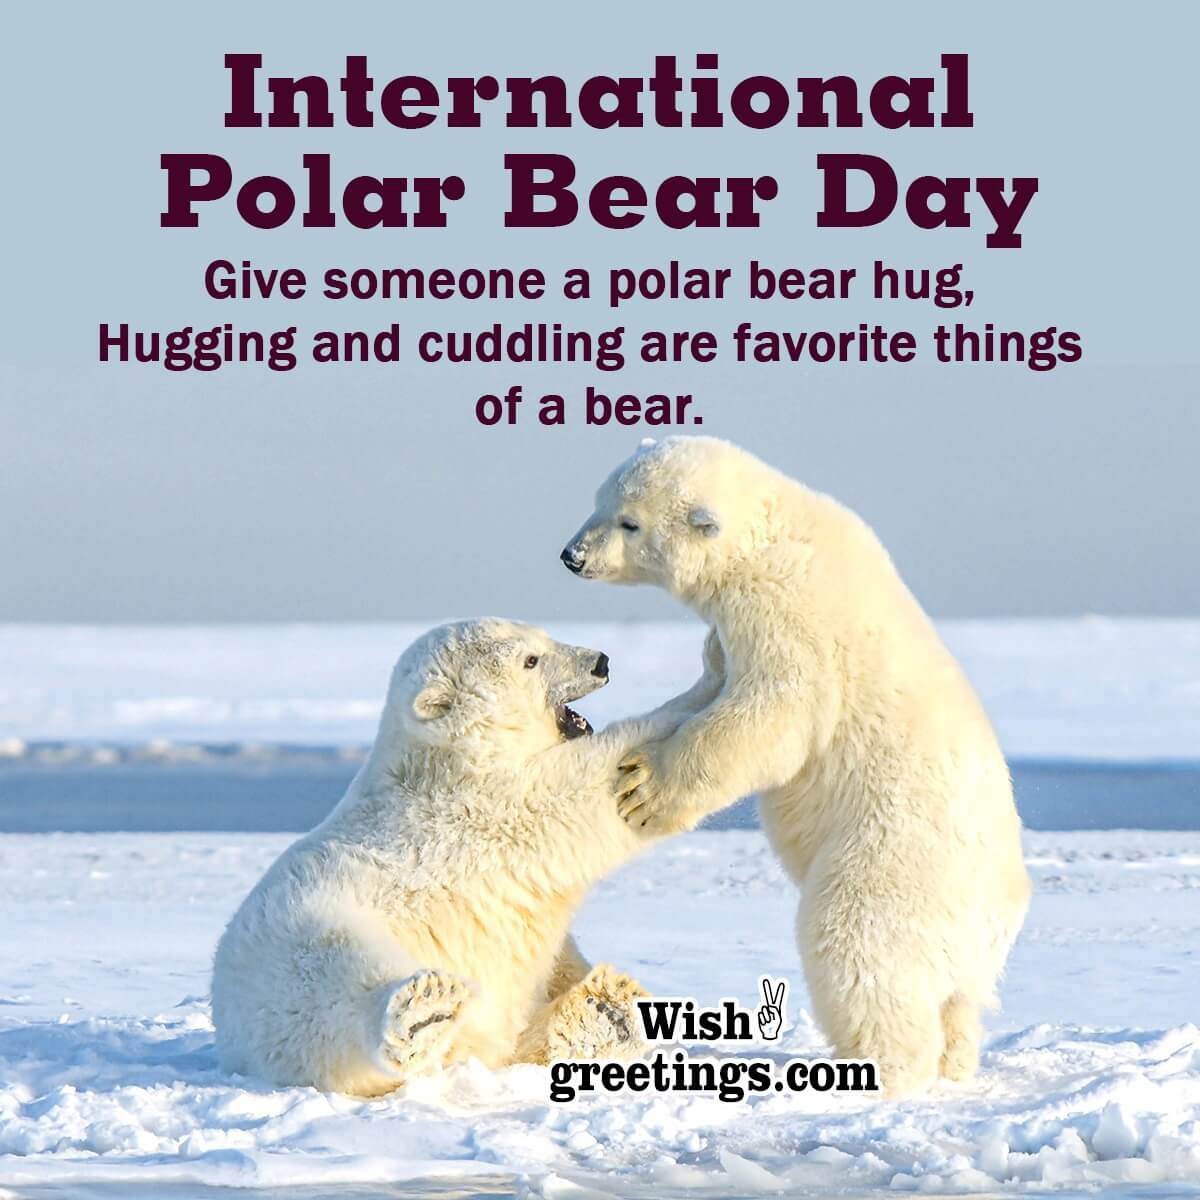 International Polar Bear Day Messages Wish Greetings